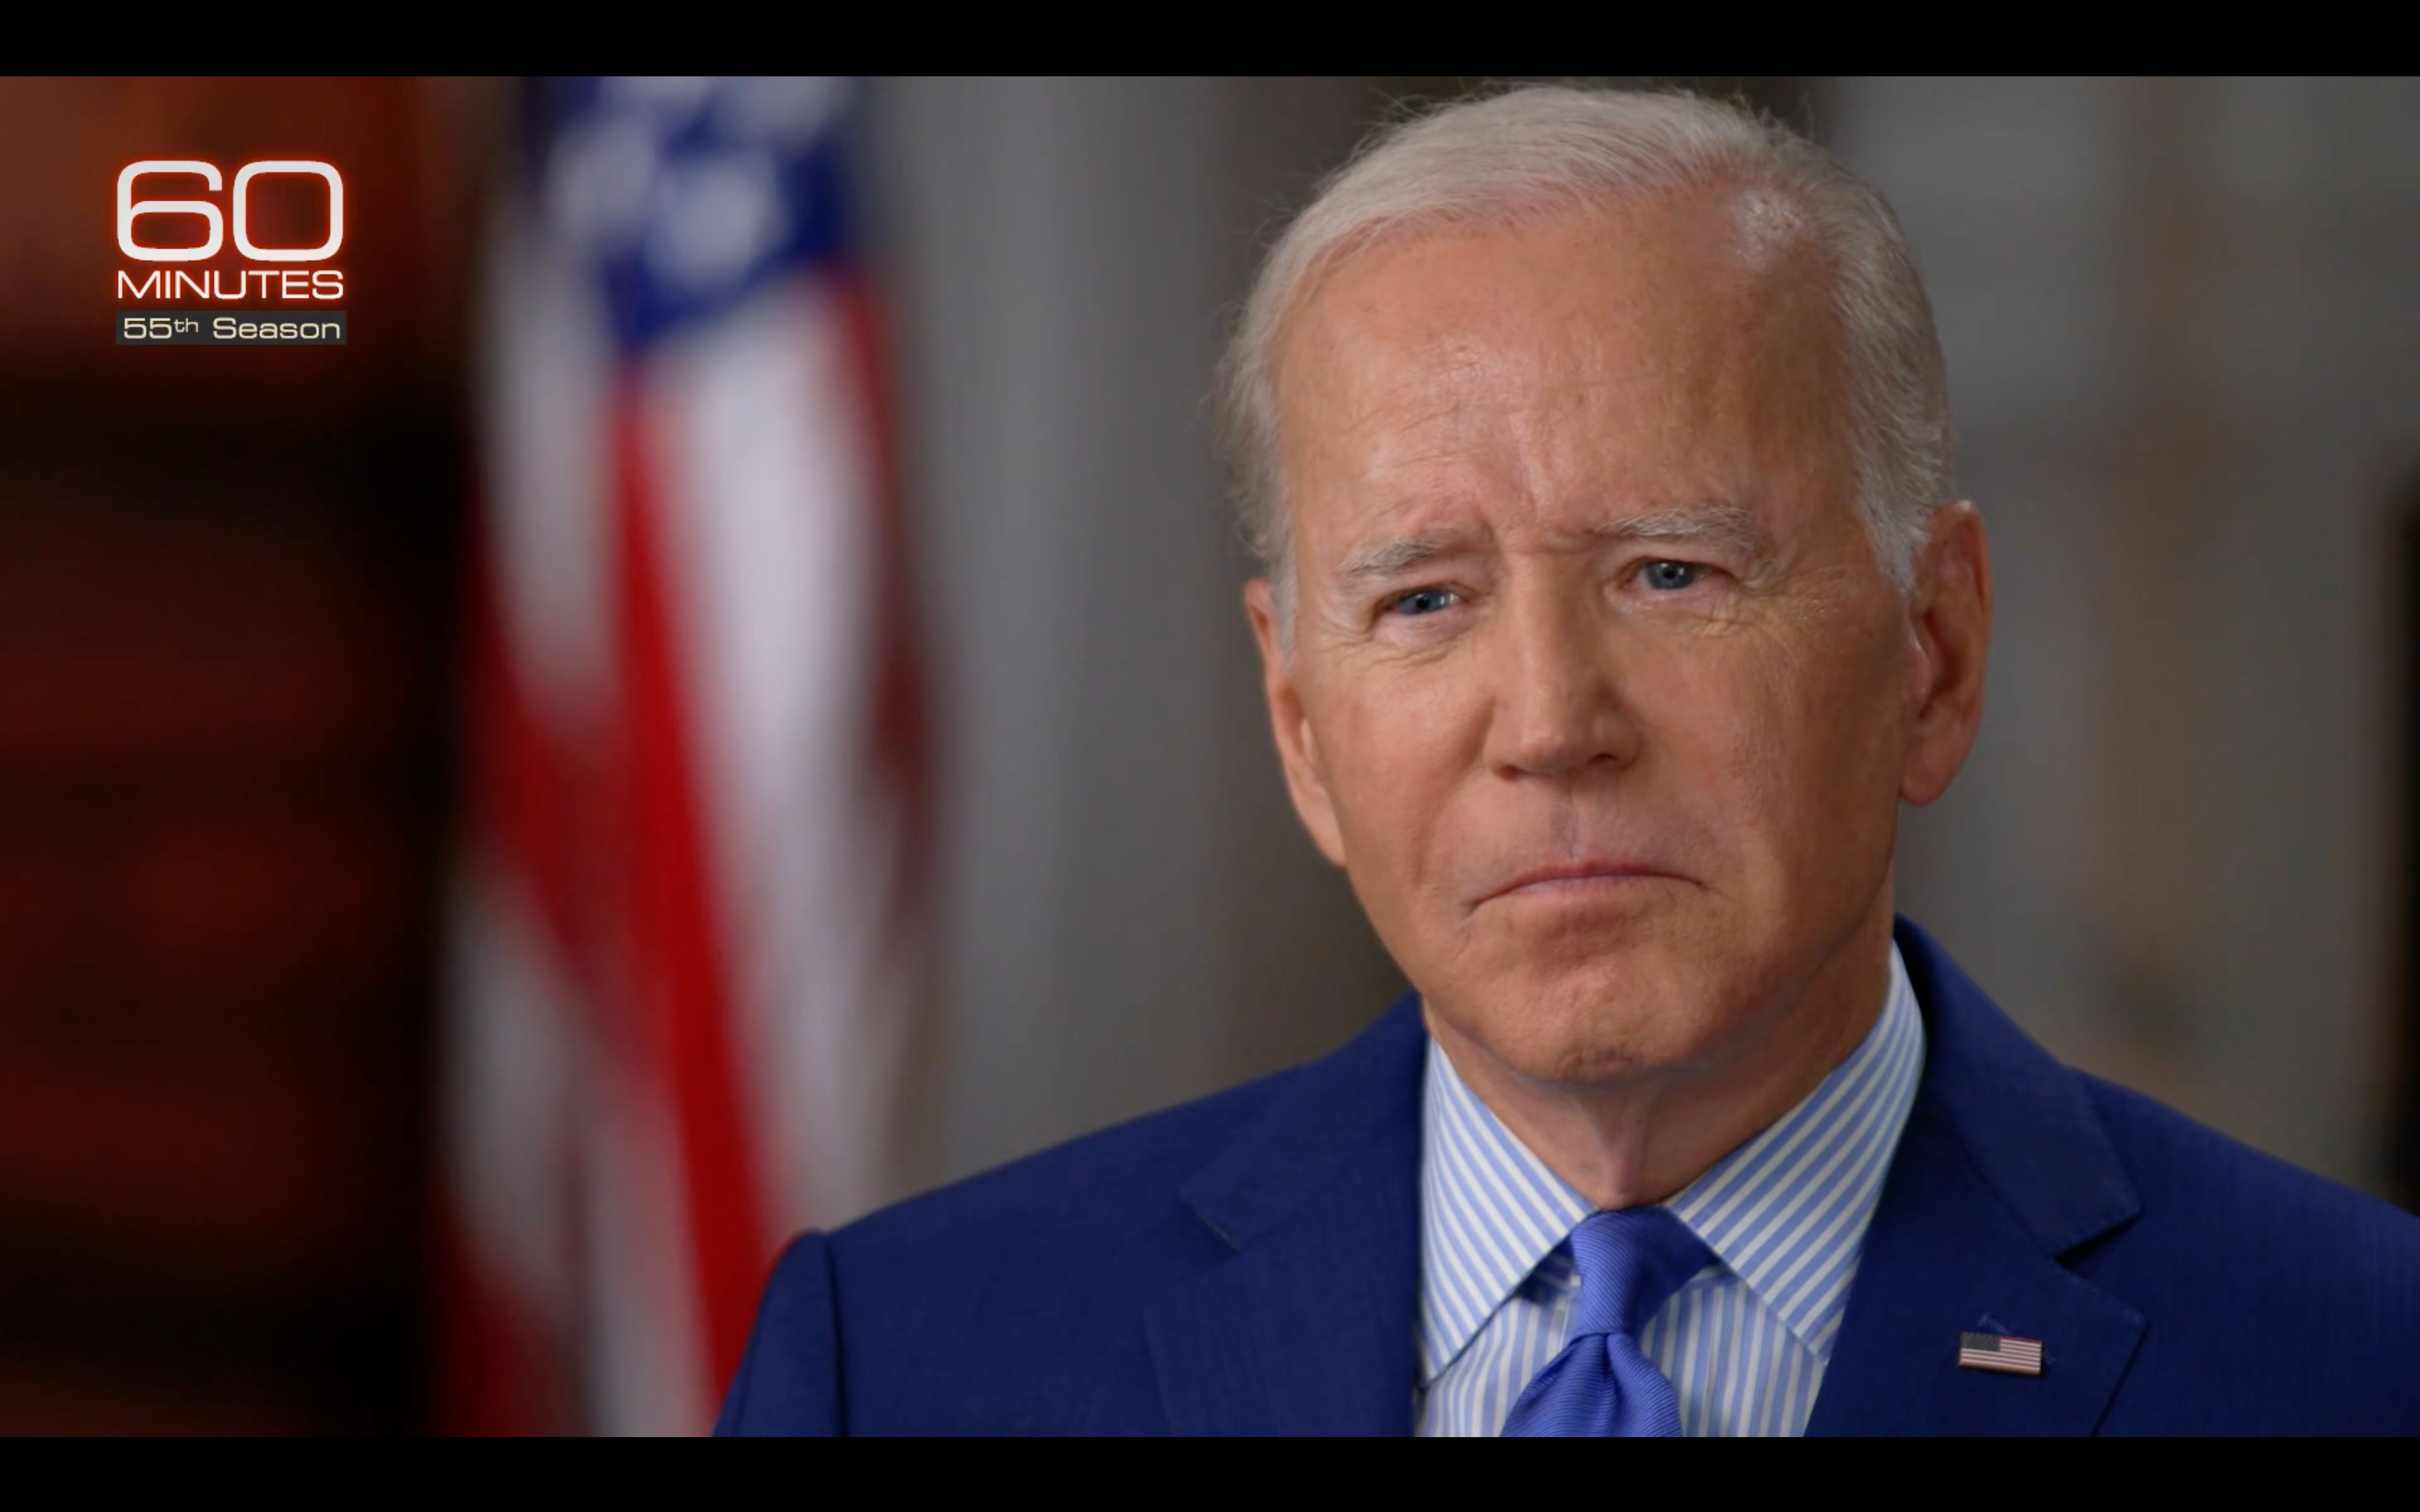 President Joe Biden is shown during an interview with CBS News on 18 September 2022